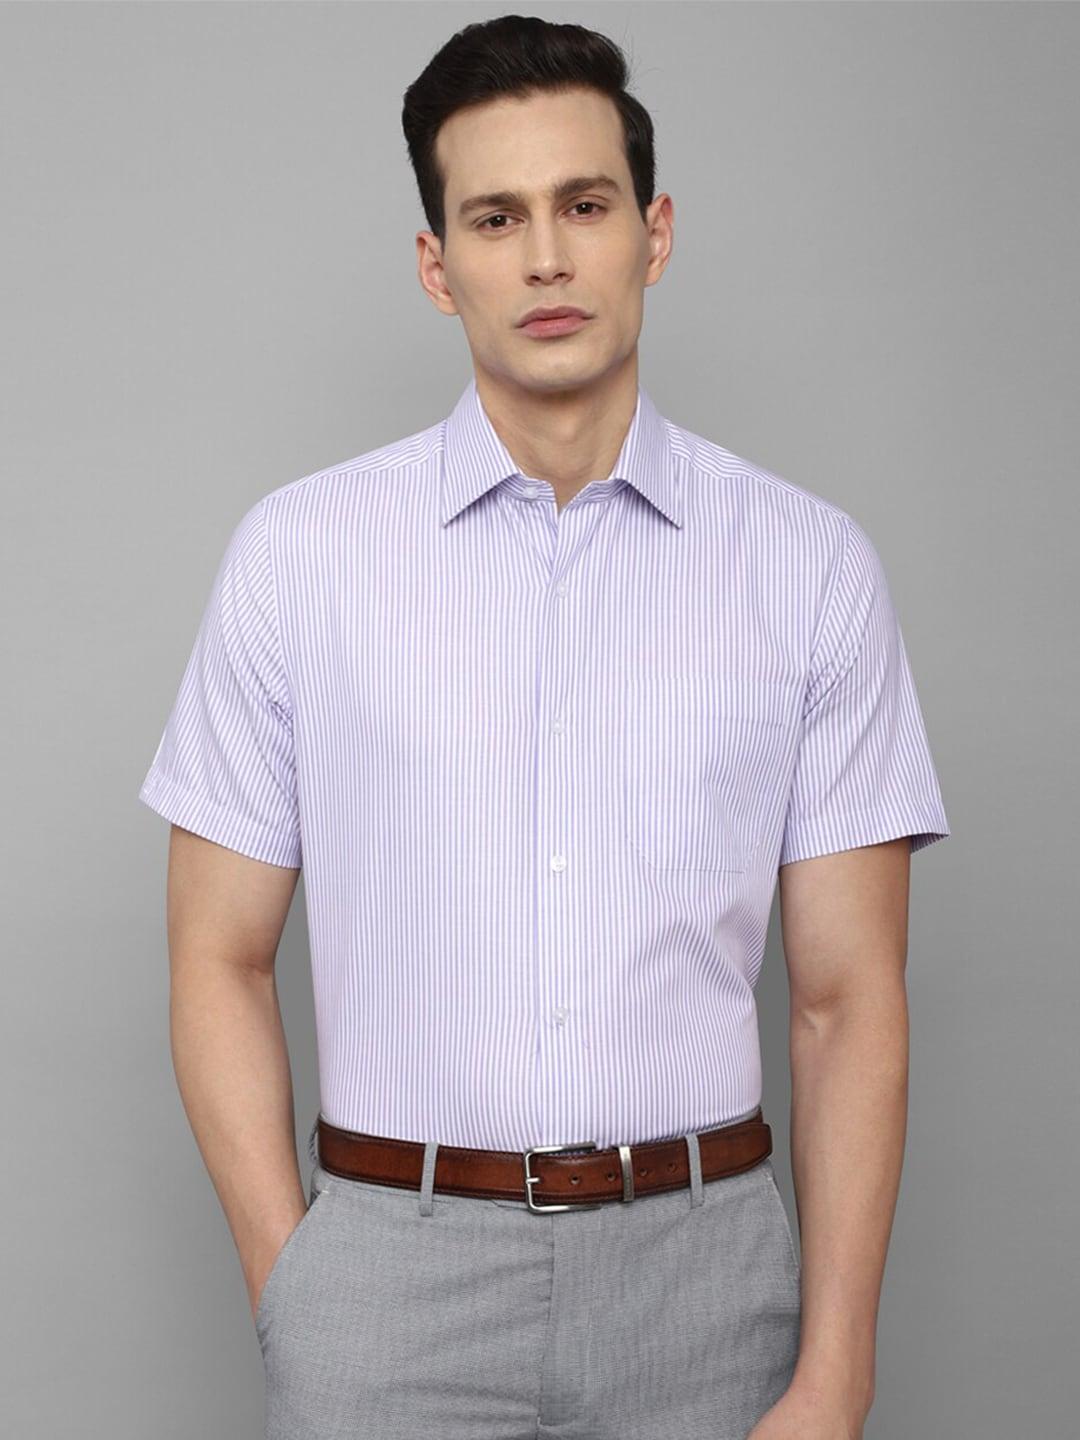 louis-philippe-men-purple-striped-formal-shirt